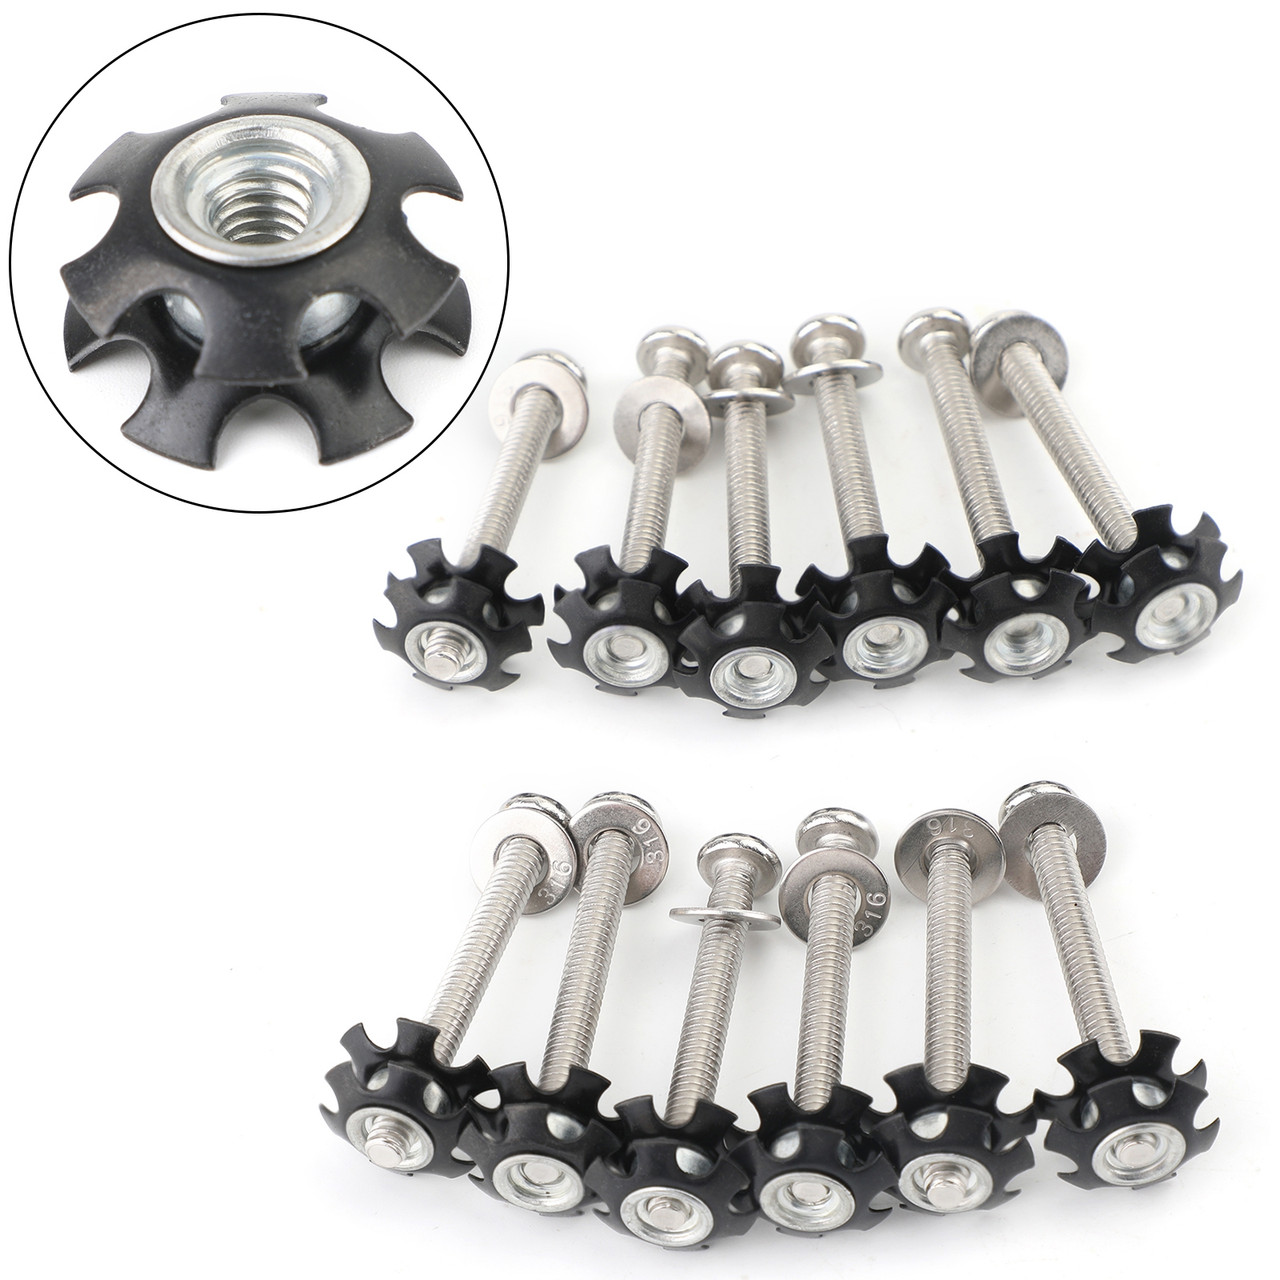 12pcs REPAIR KIT Star nuts 1/4-20 screws For 1" OD tube Threadless Forks